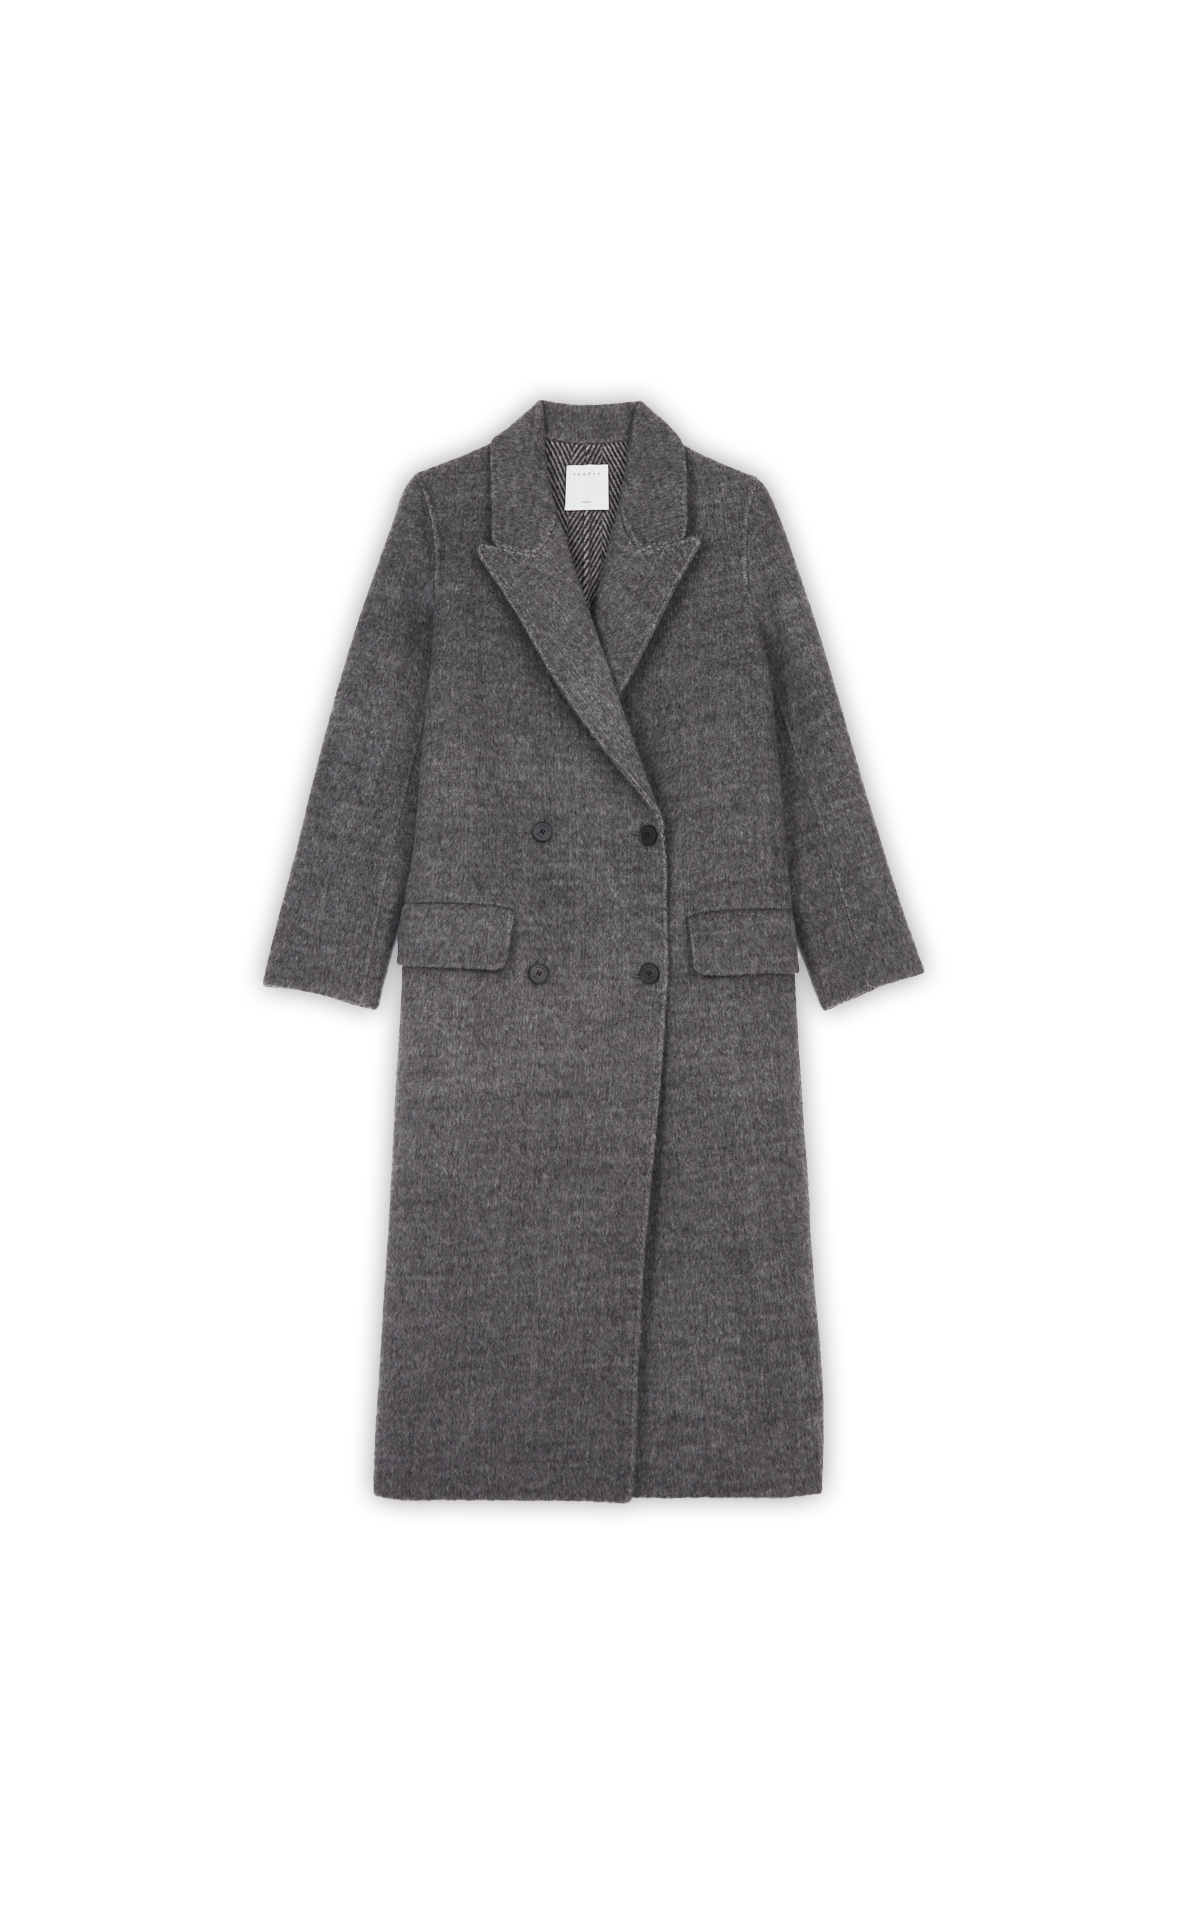 Long grey fur-textured coat*